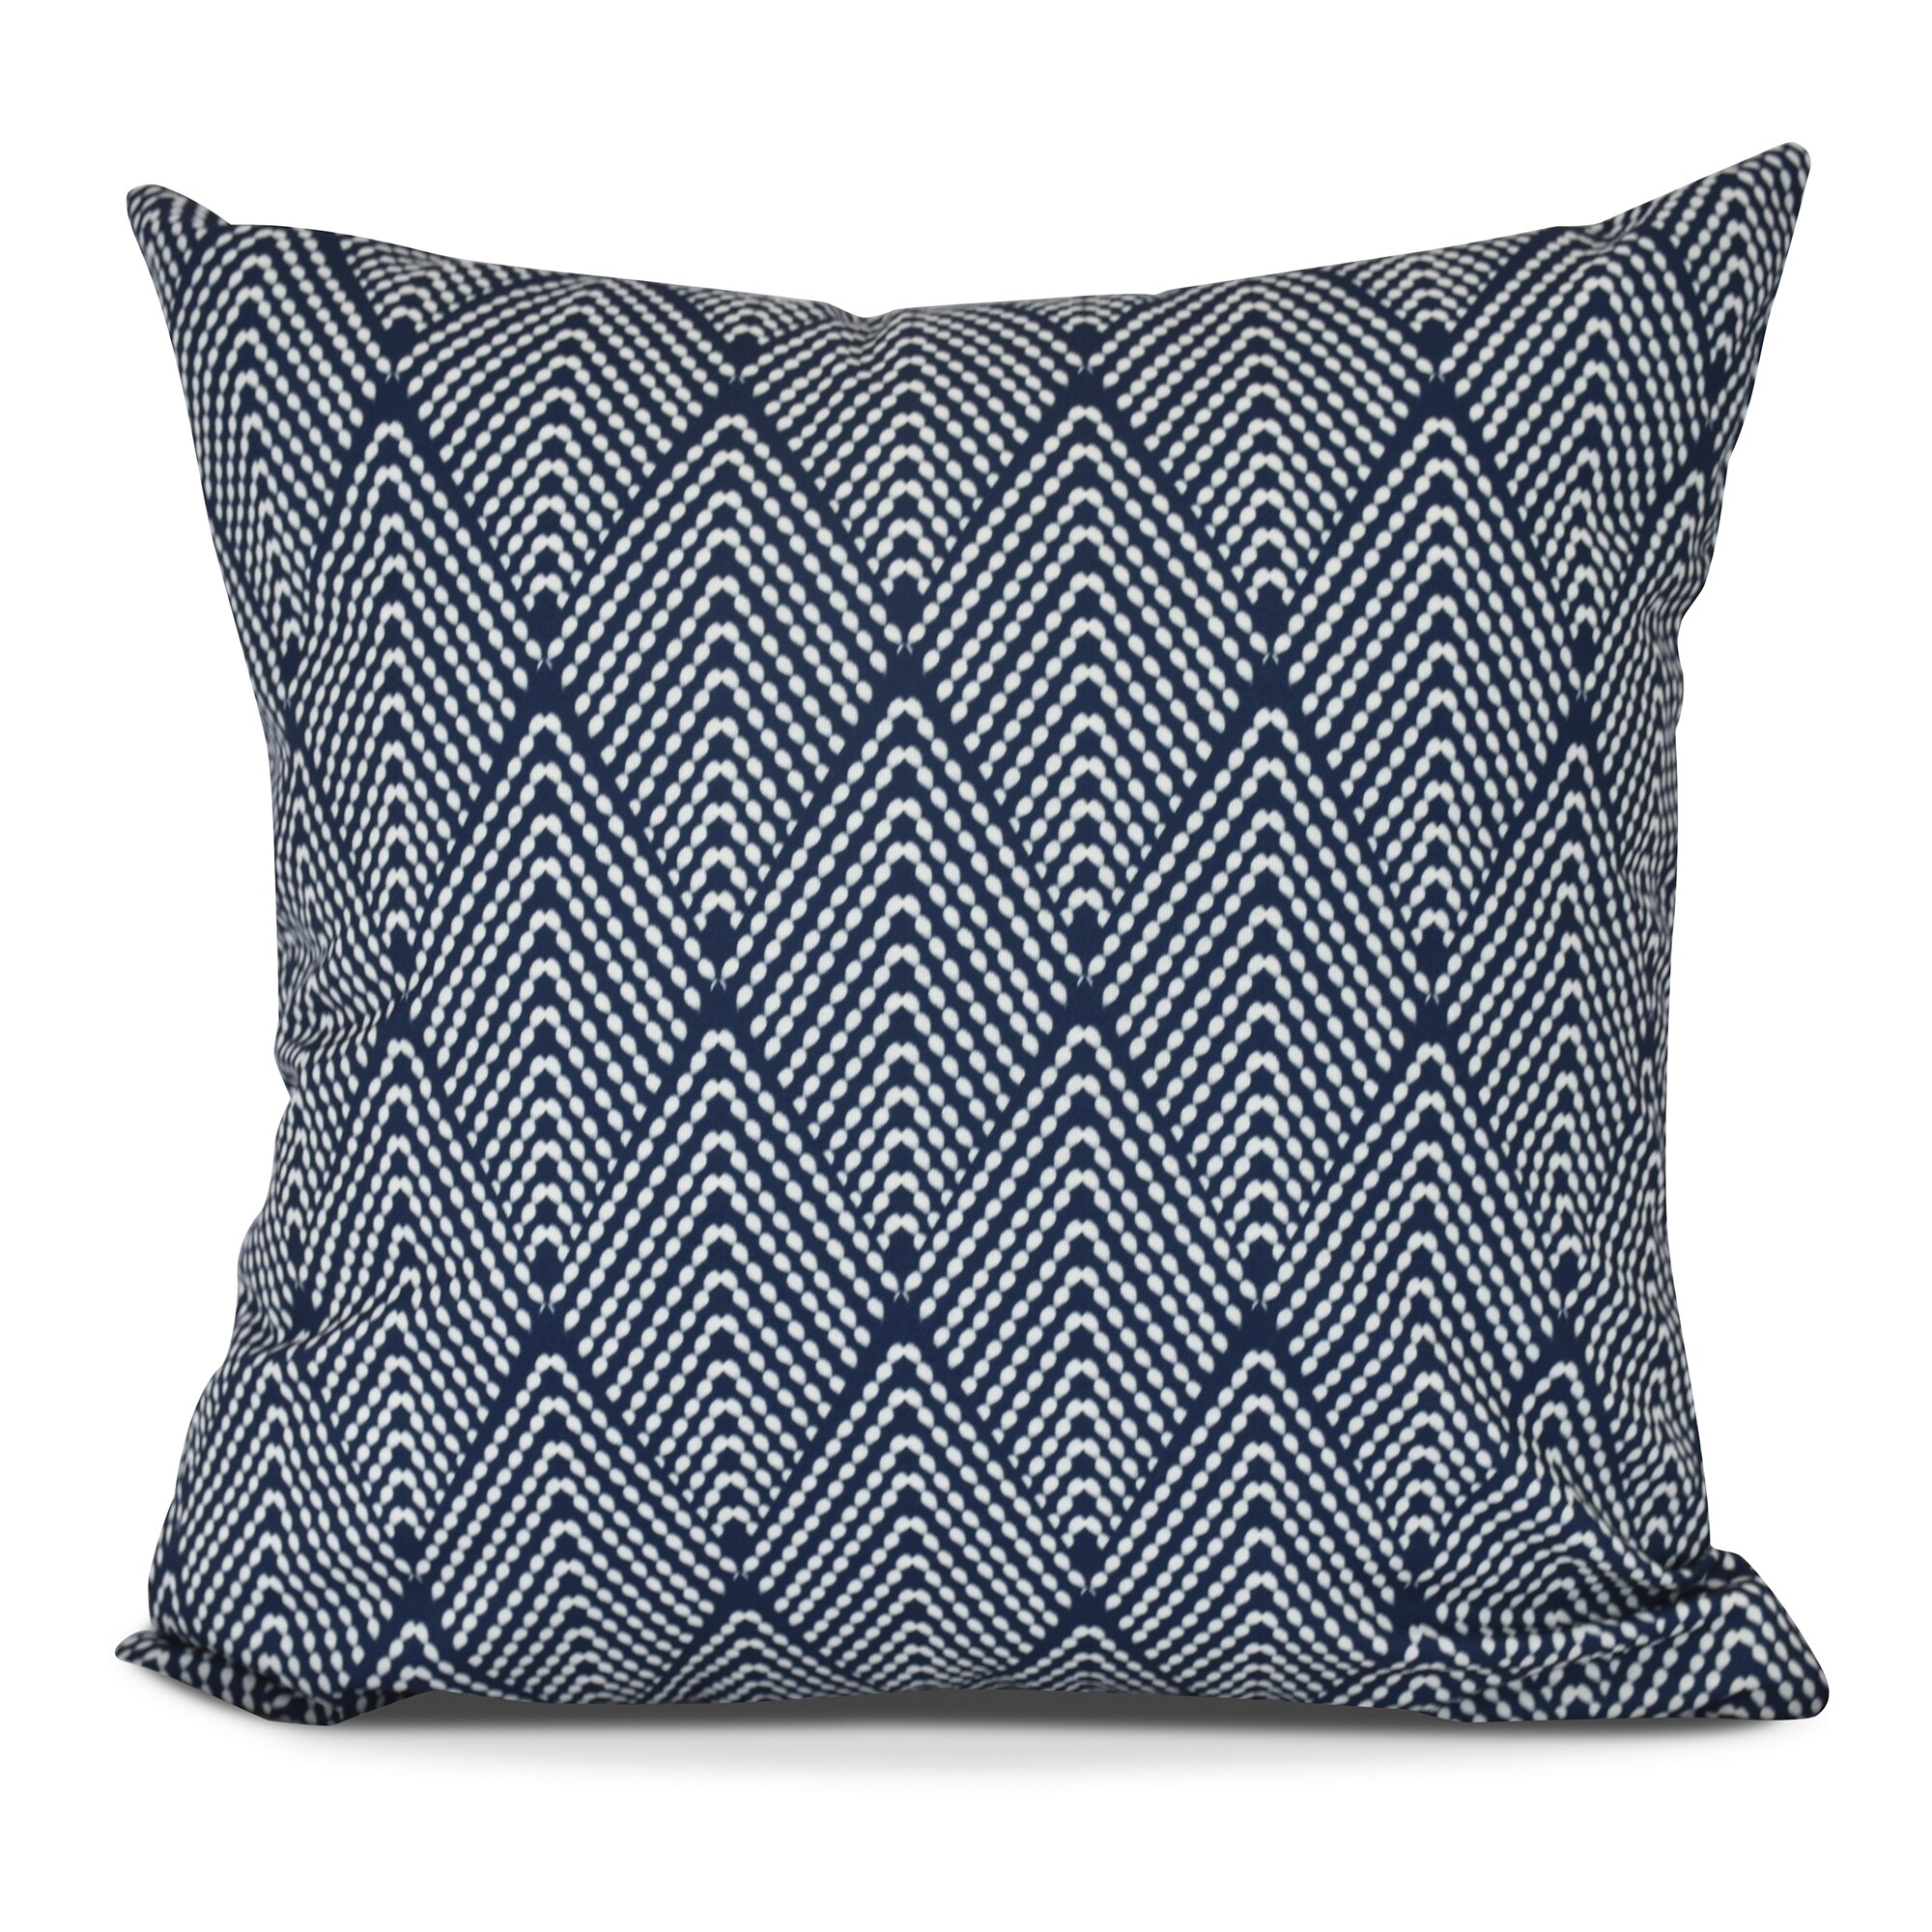 Simply Daisy, Lifeflor Geometric Print Outdoor Pillow - image 2 of 2